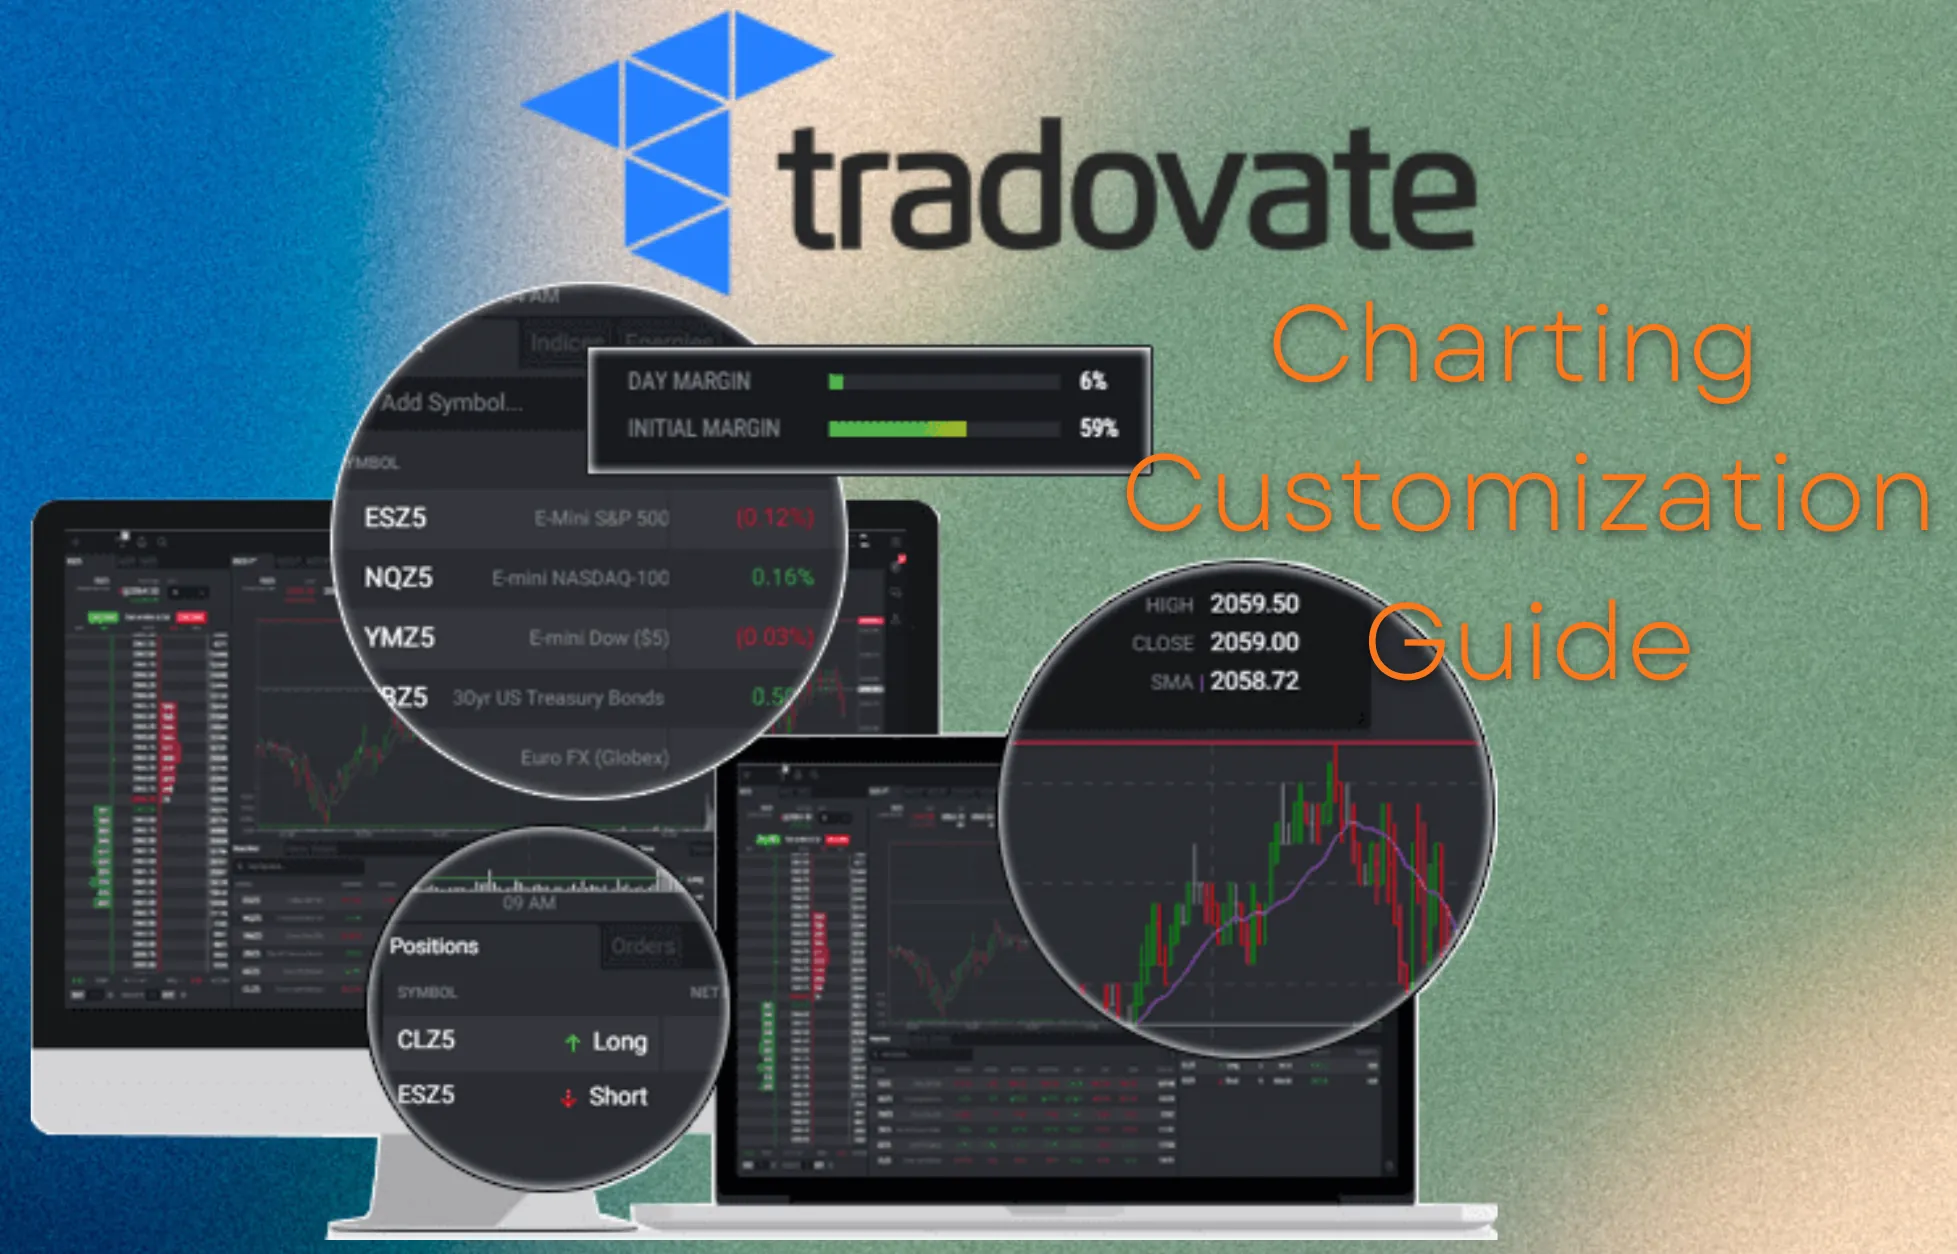 Tradovate Charting Customization Guide